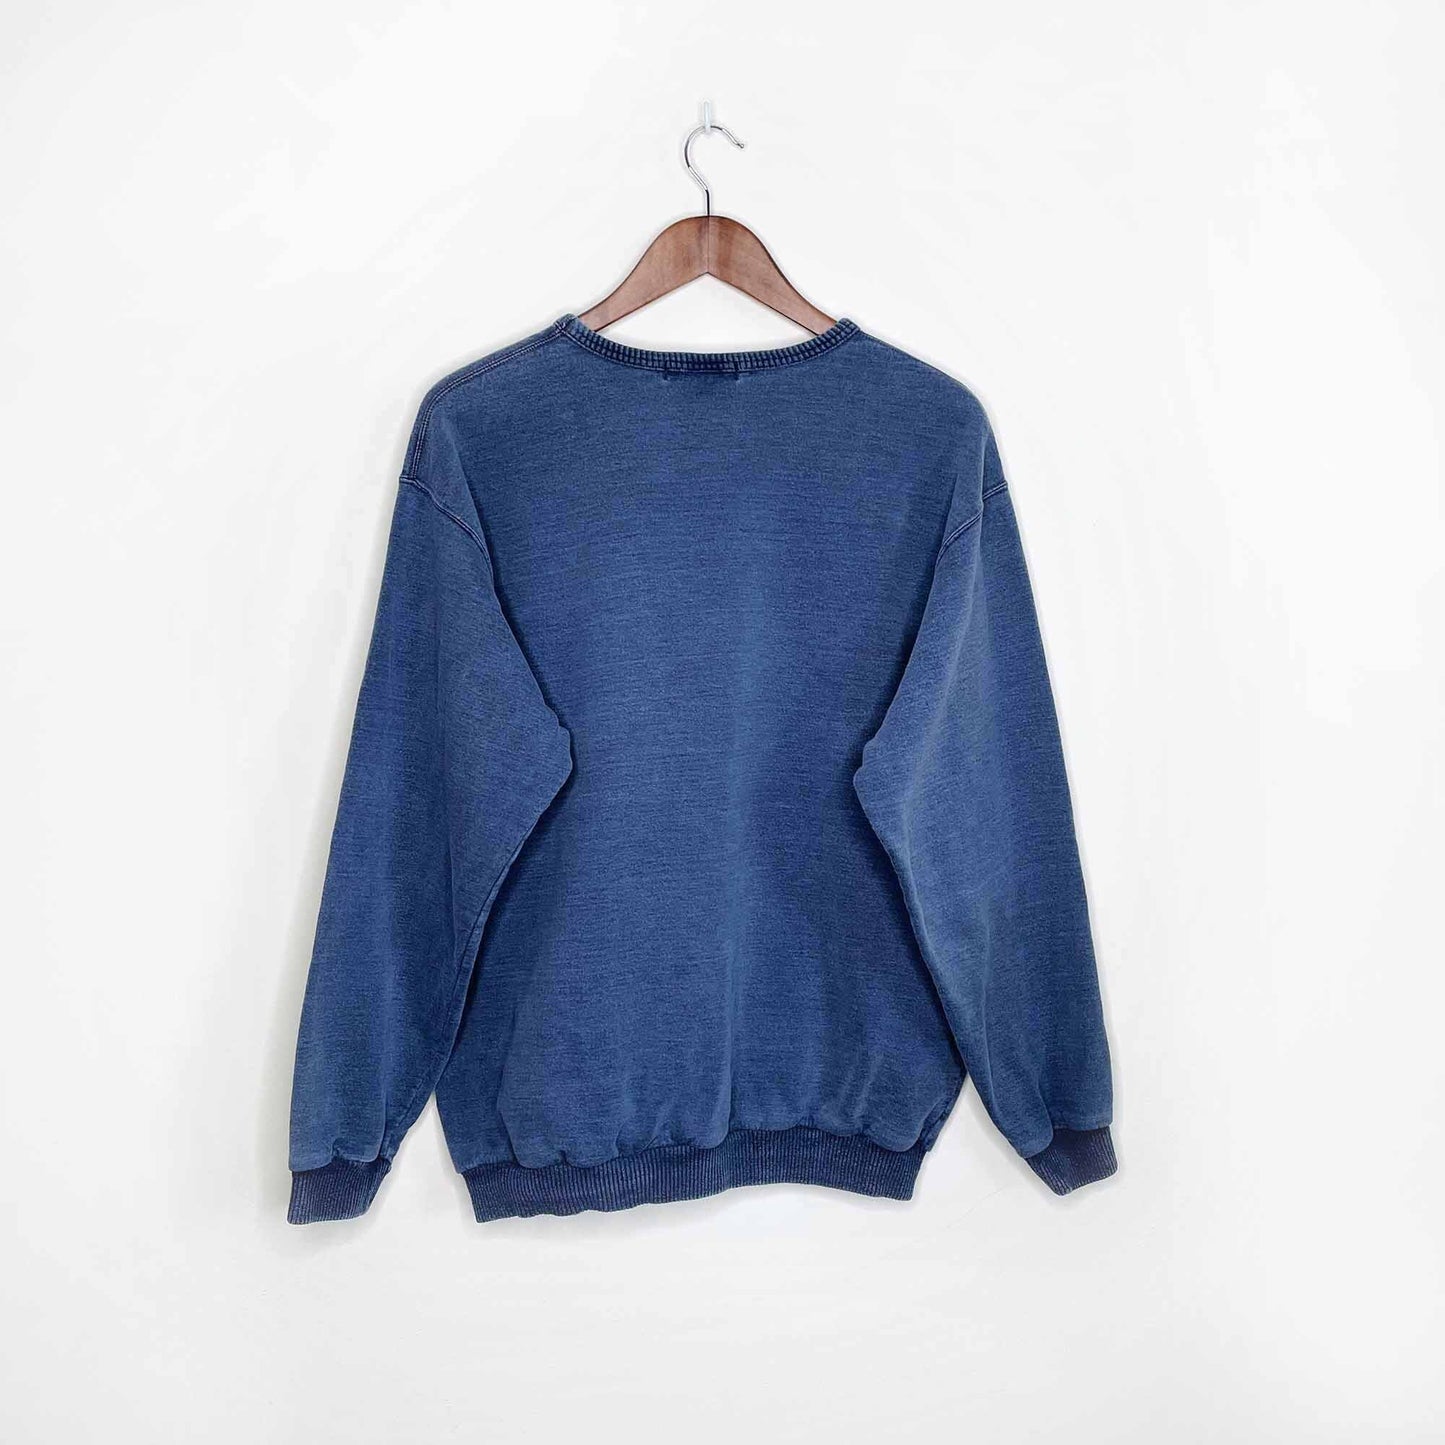 Vintage Northern Reflections crewneck sweatshirt - size Medium